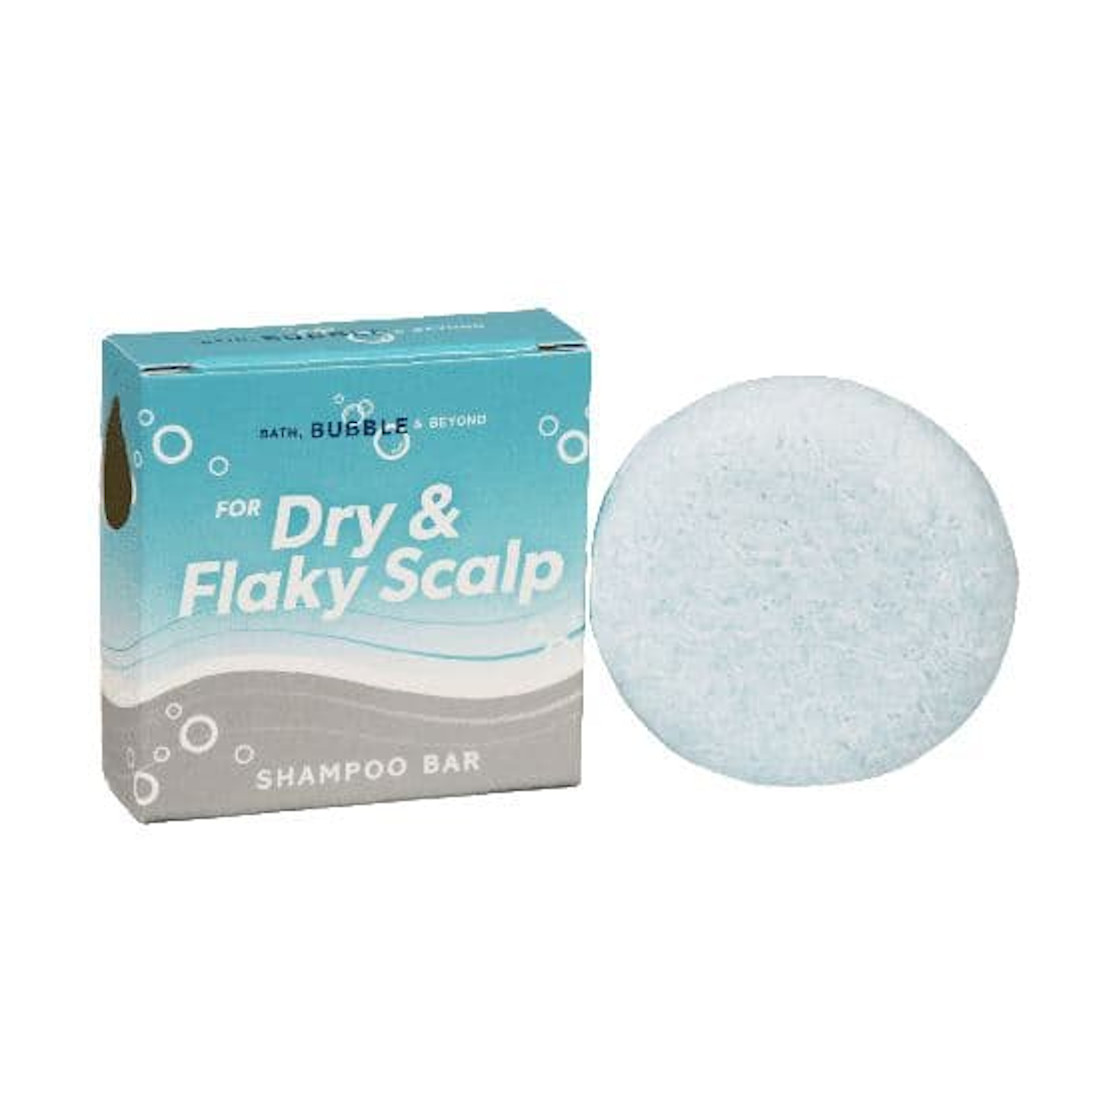 Bath Bubble and Beyond Dry & Flaky Scalp Shampoo Bar